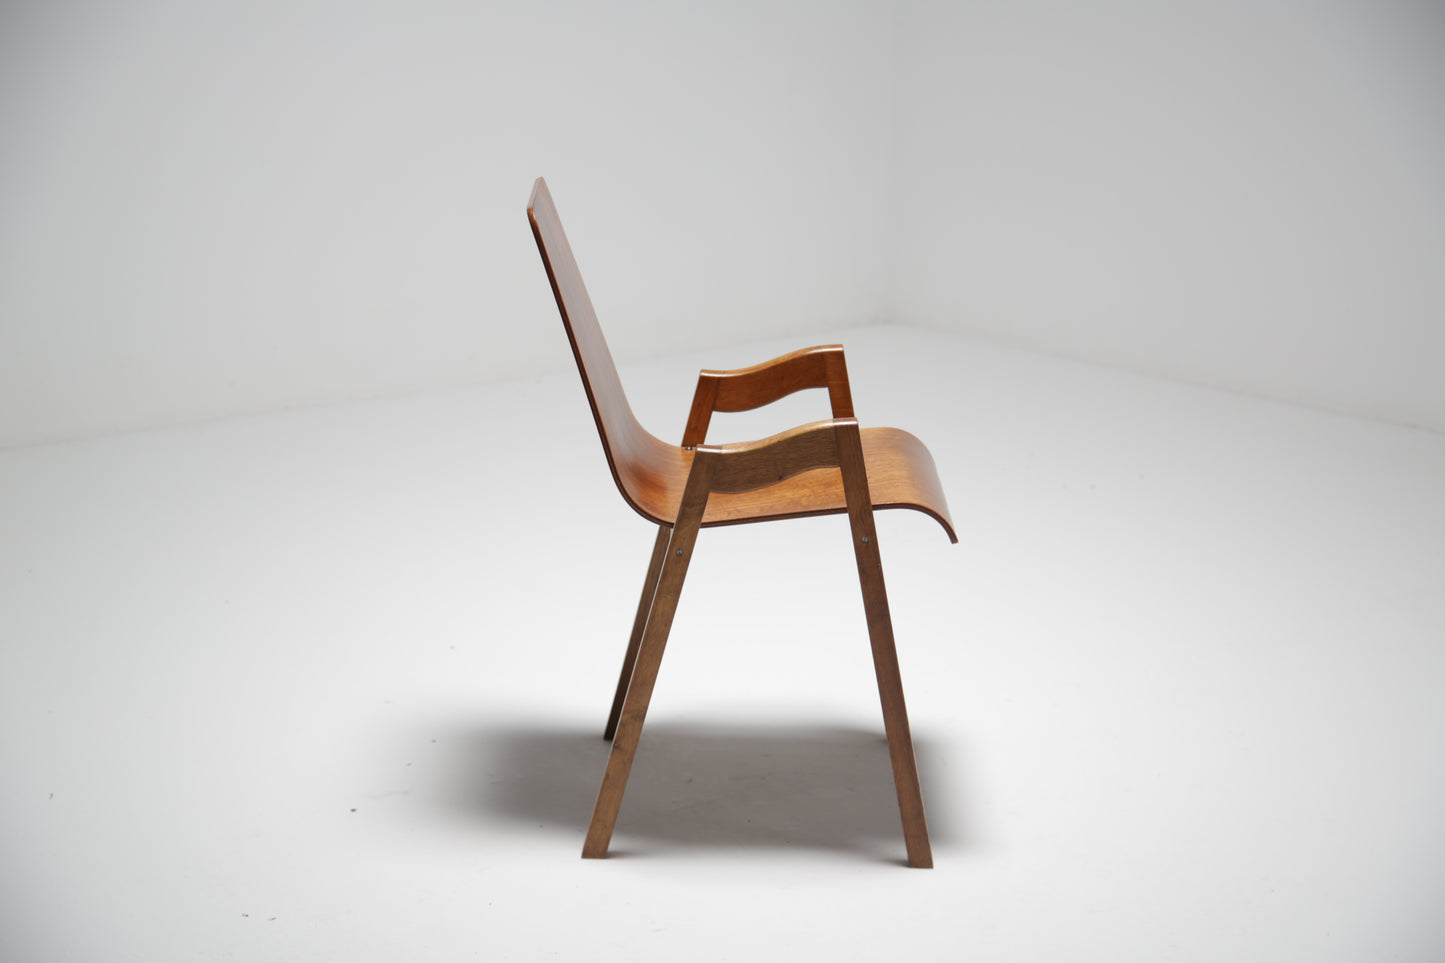 Bent Ply mid-century chair